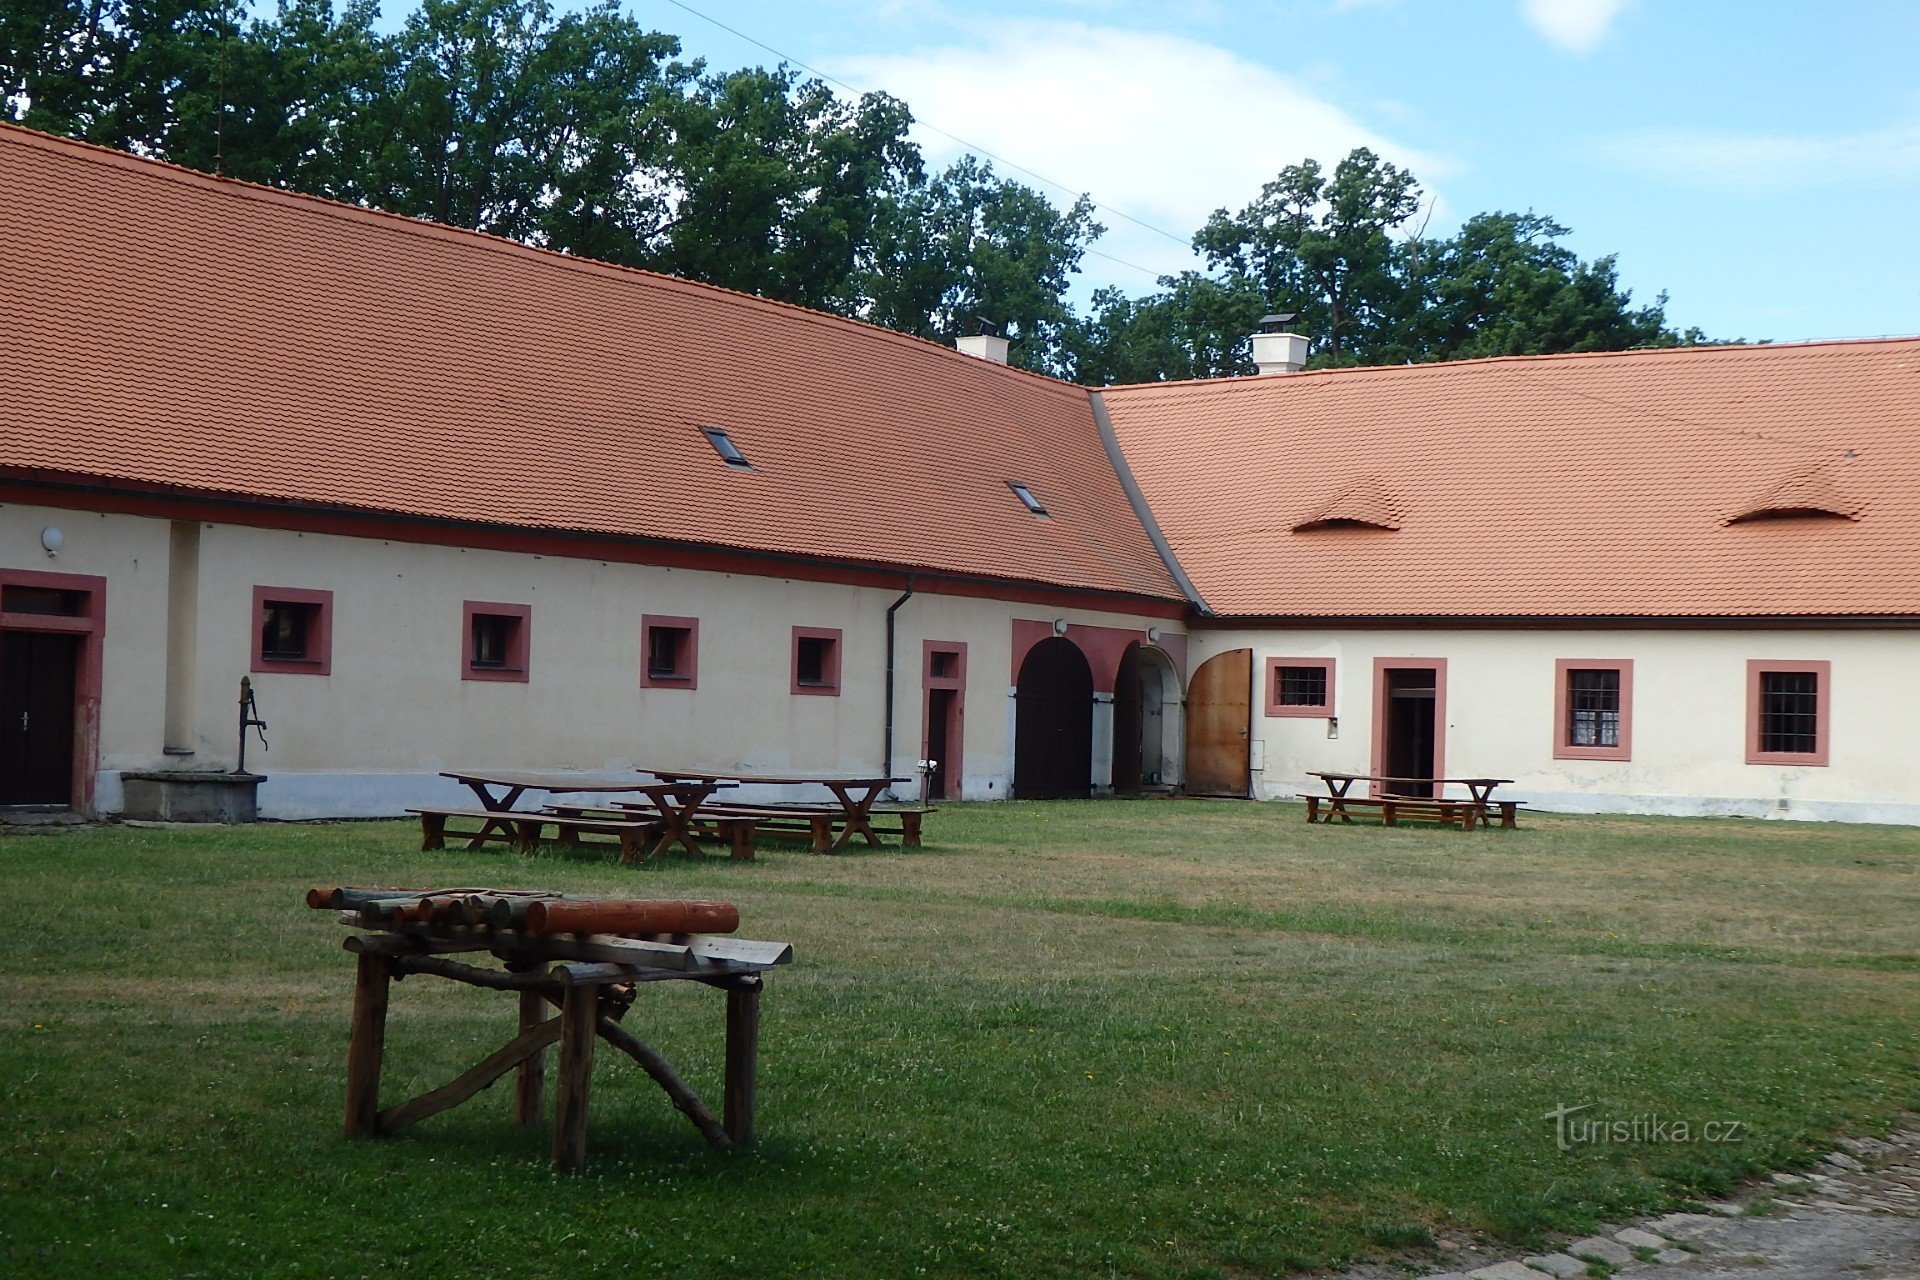 Hluboká nad Vltavou: casino di caccia Ohrada e zoo